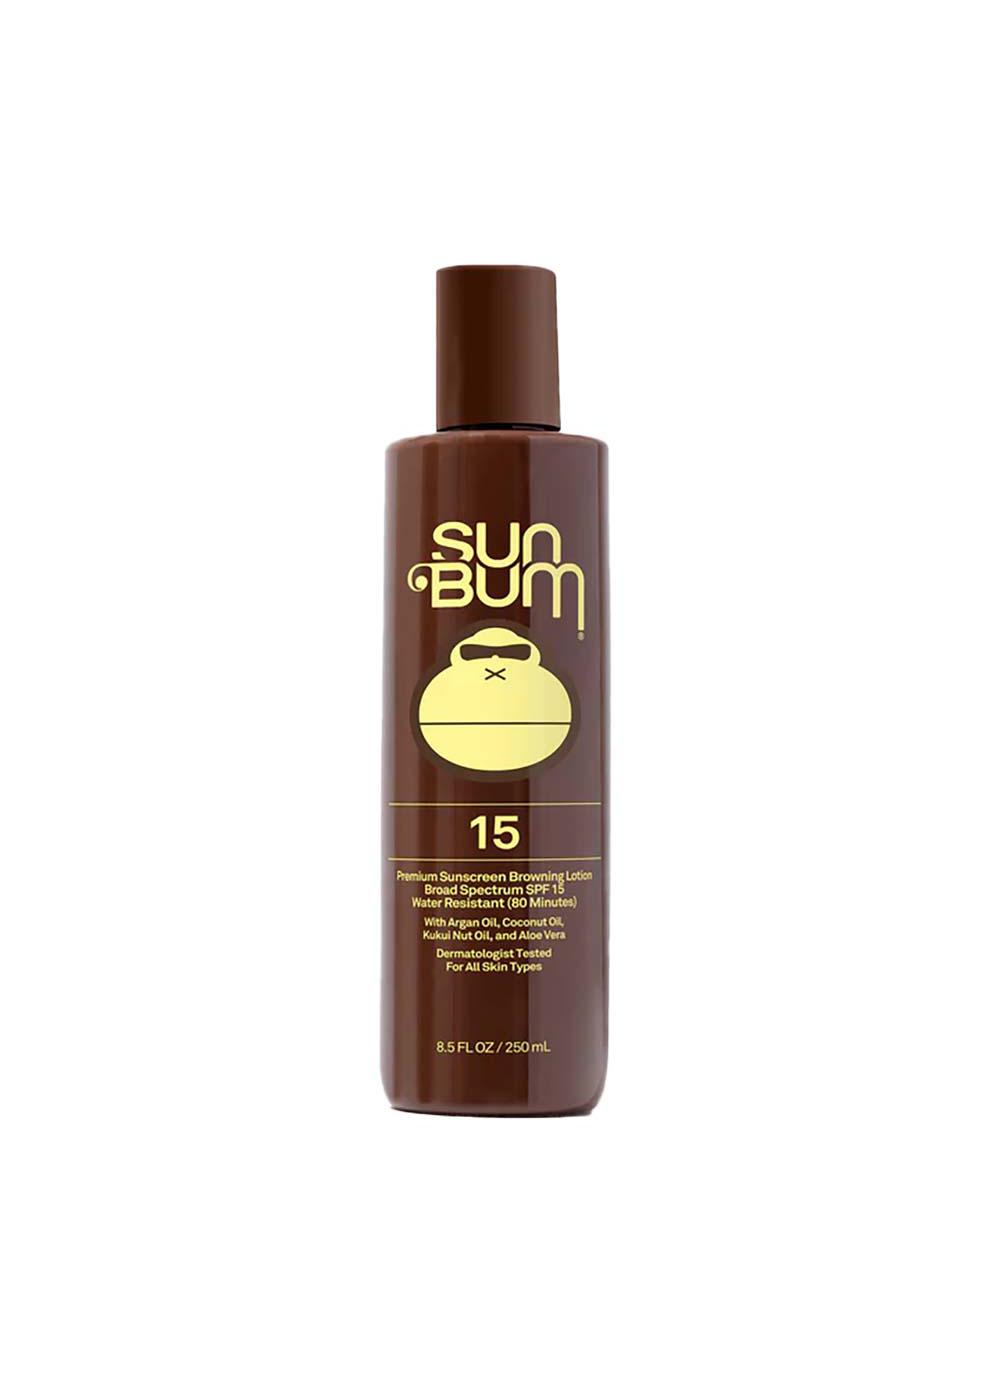 Sun Bum Sunscreen Browning Lotion SPF 15; image 1 of 4